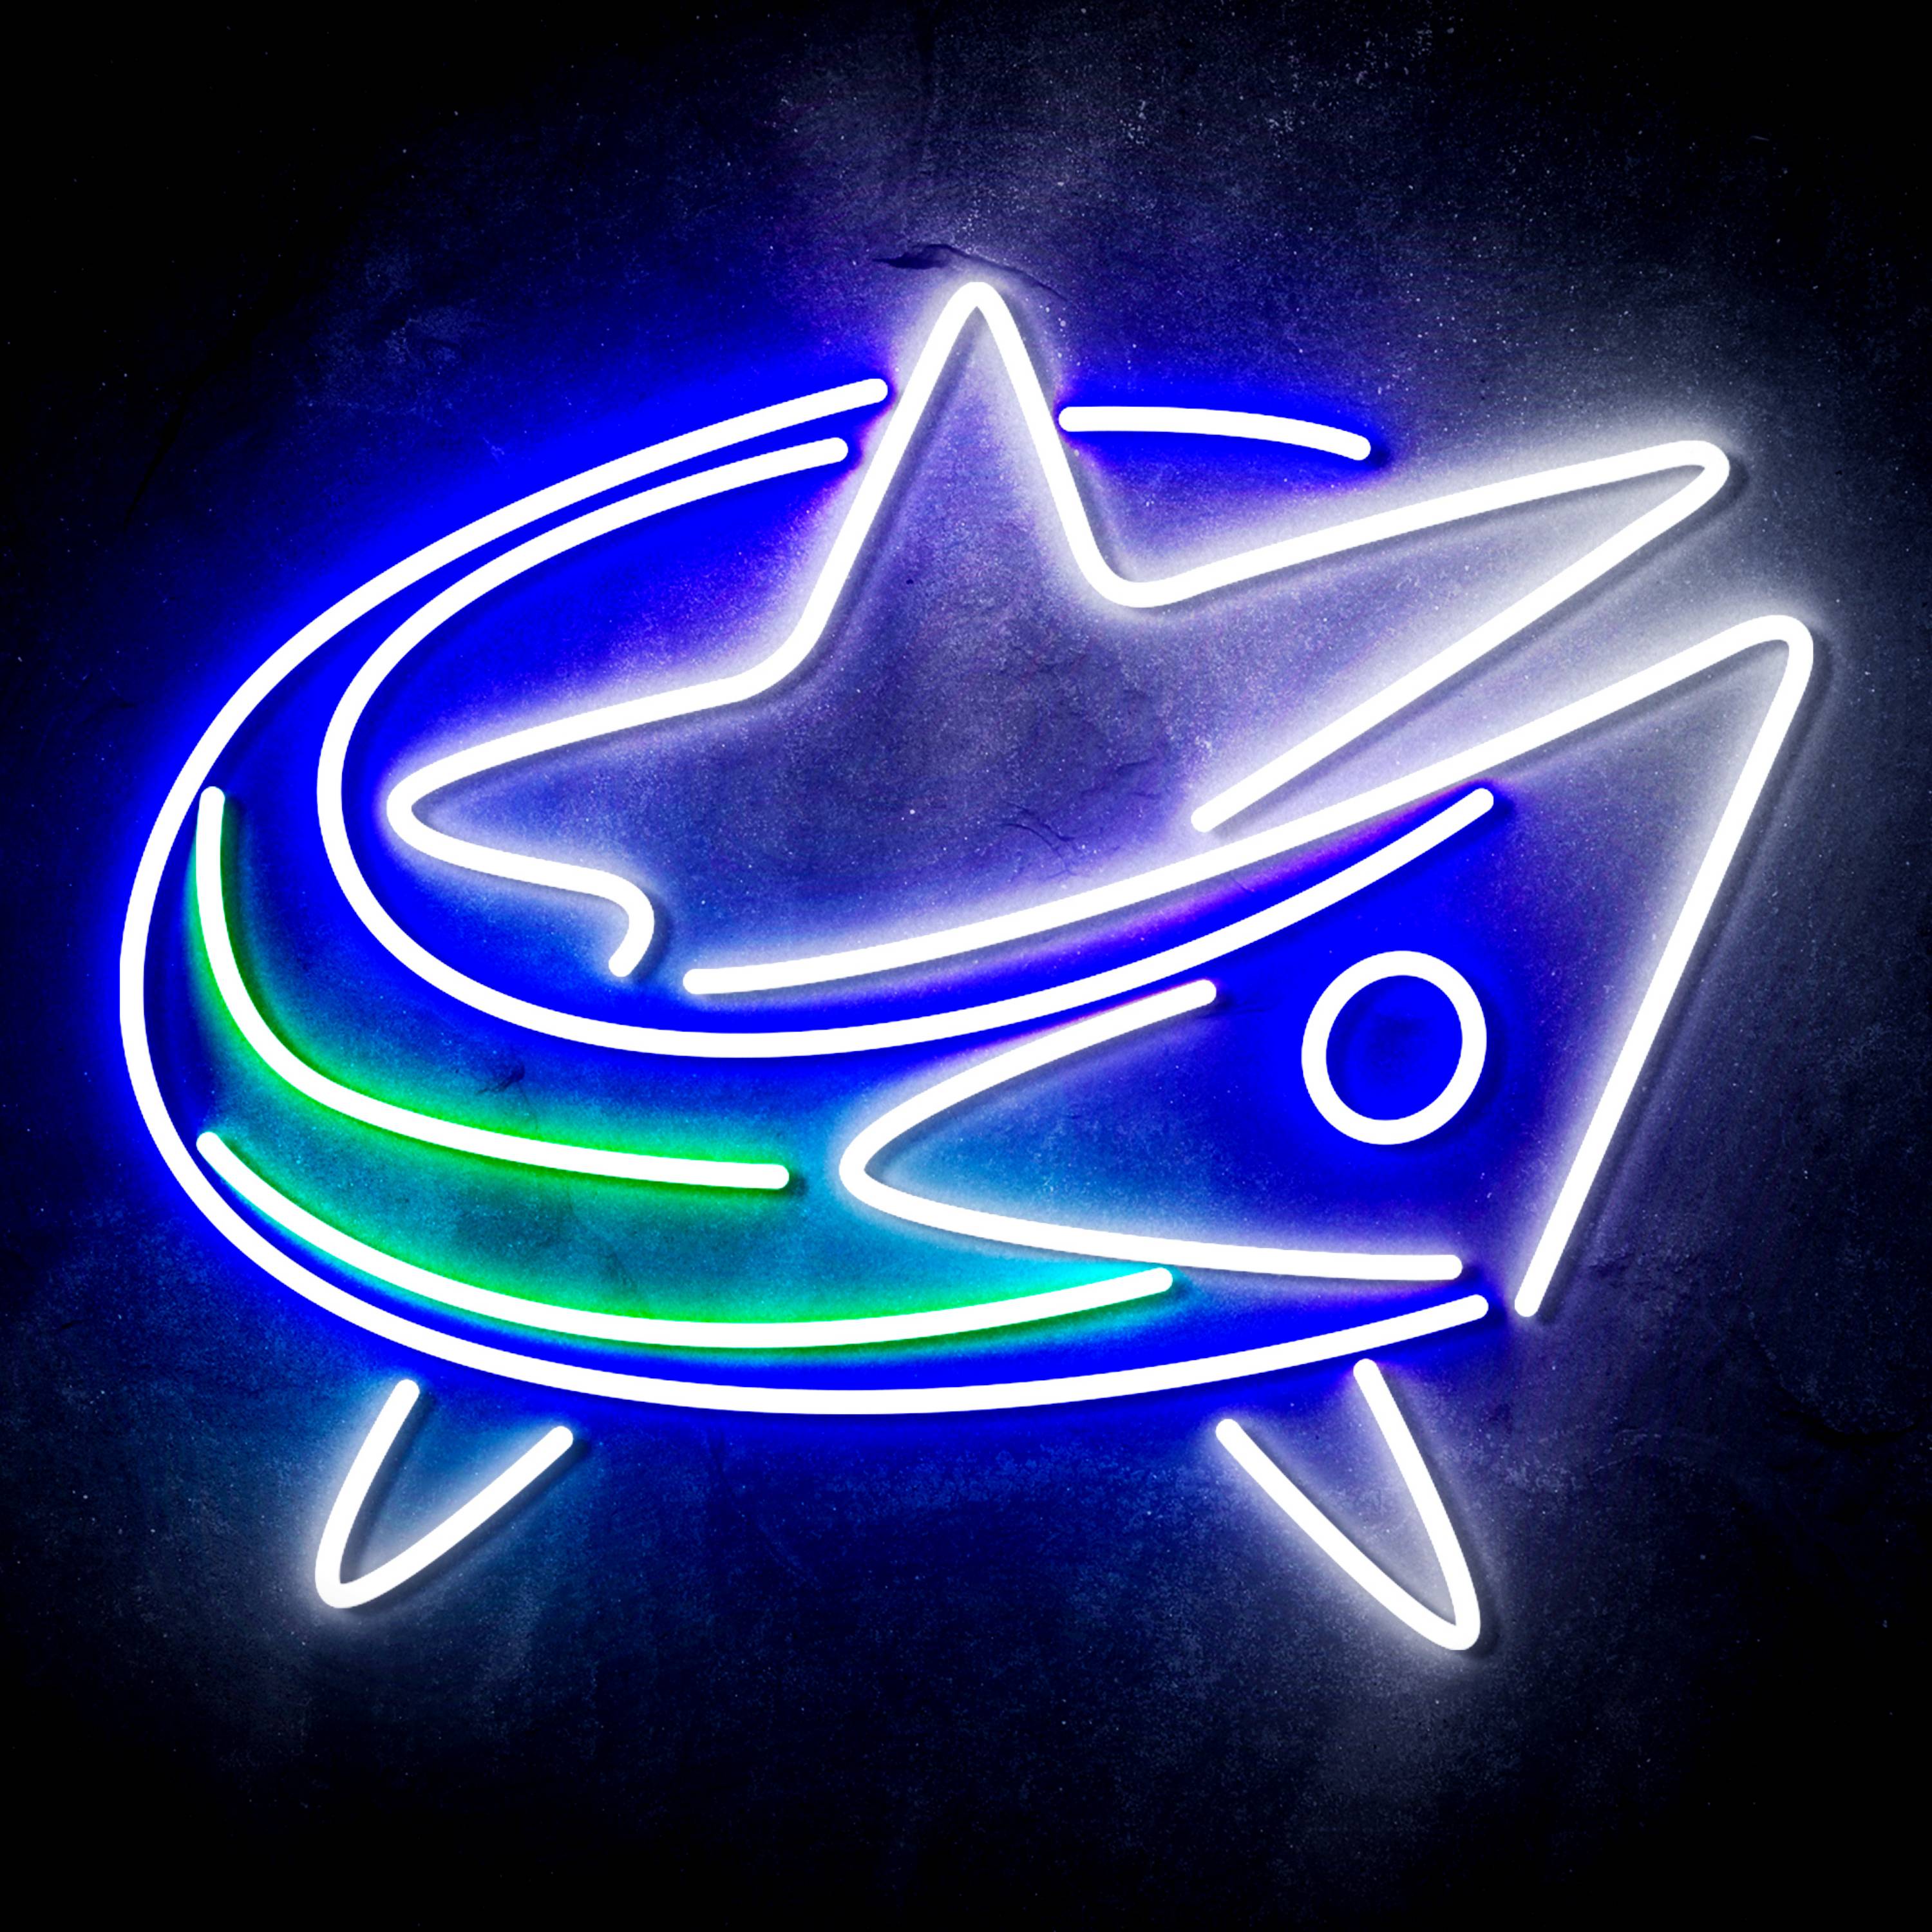 NHL Columbus Blue Jackets LED Neon Sign